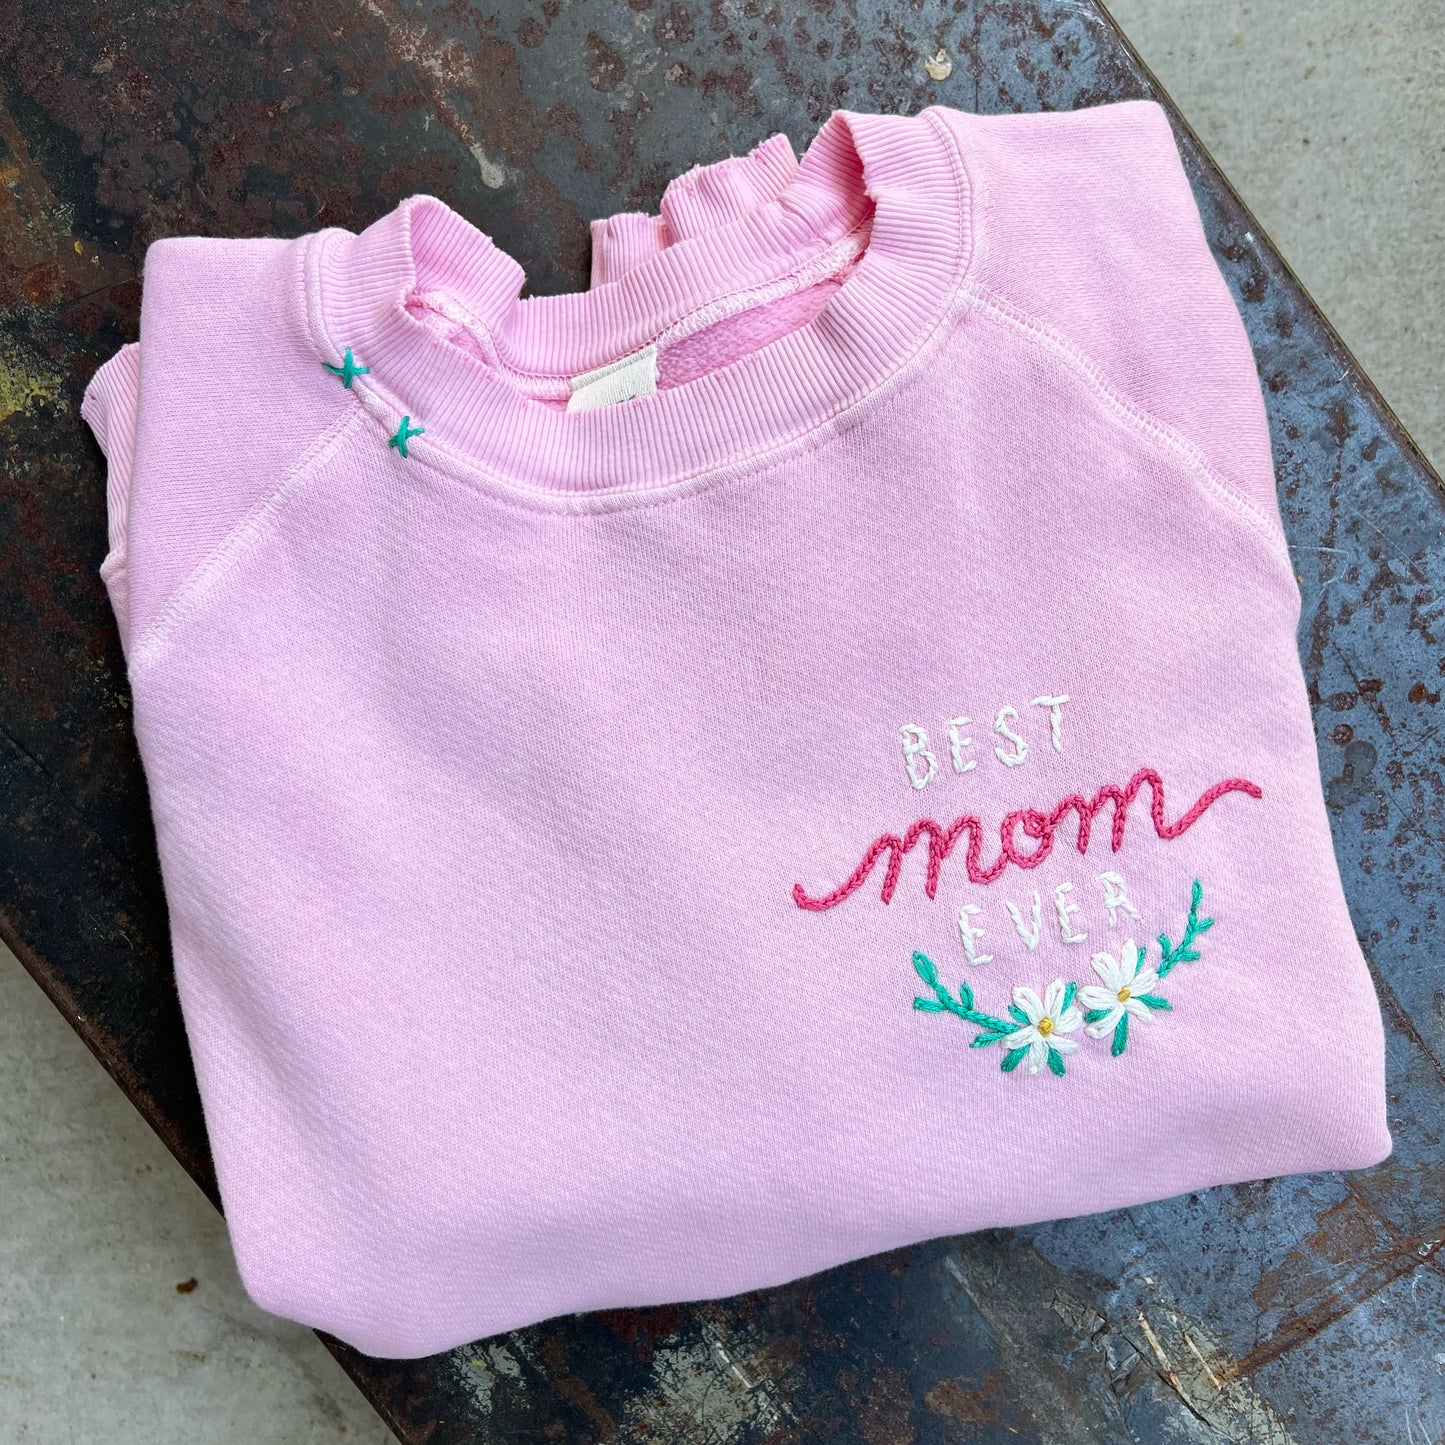 Best Mom Ever Sweatshirts (14Colors)